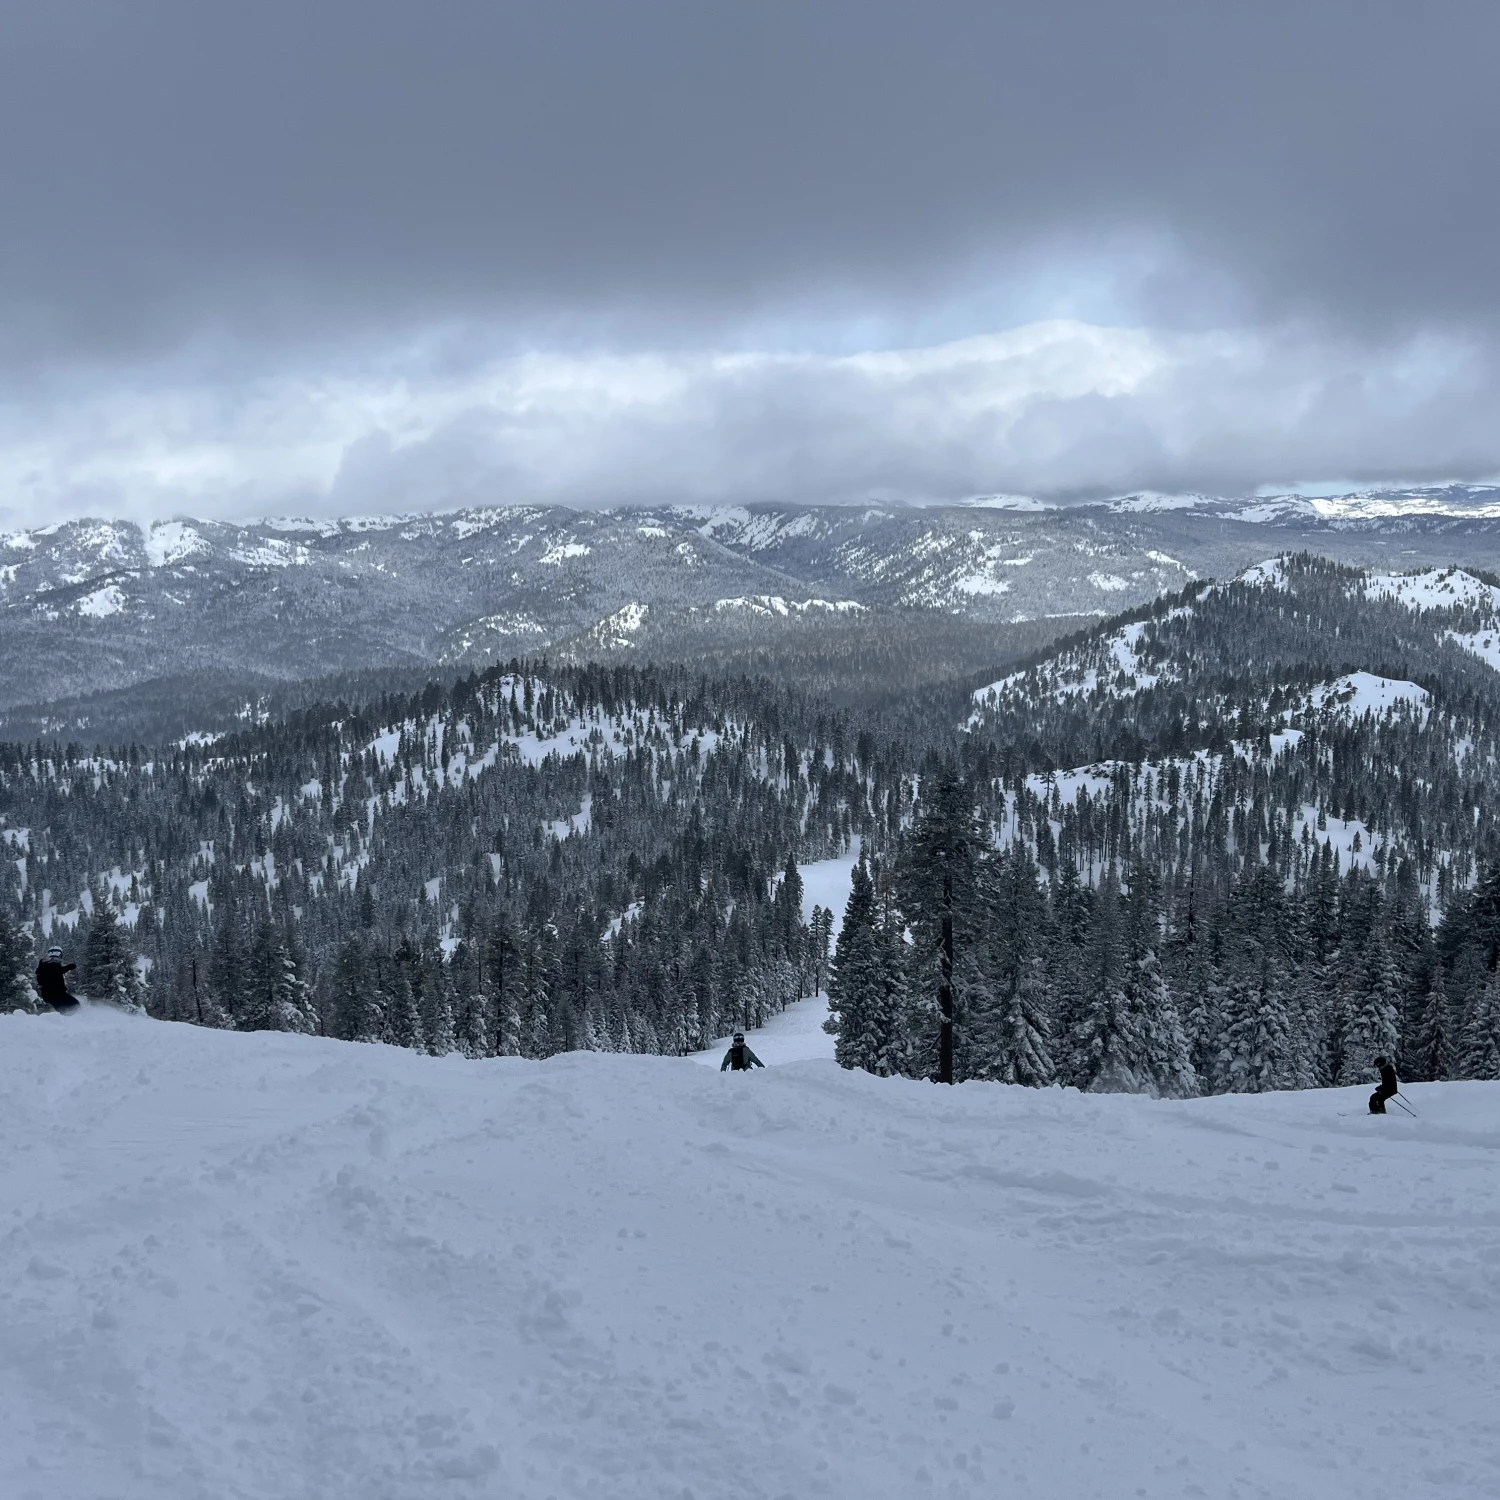 View of a snowy region